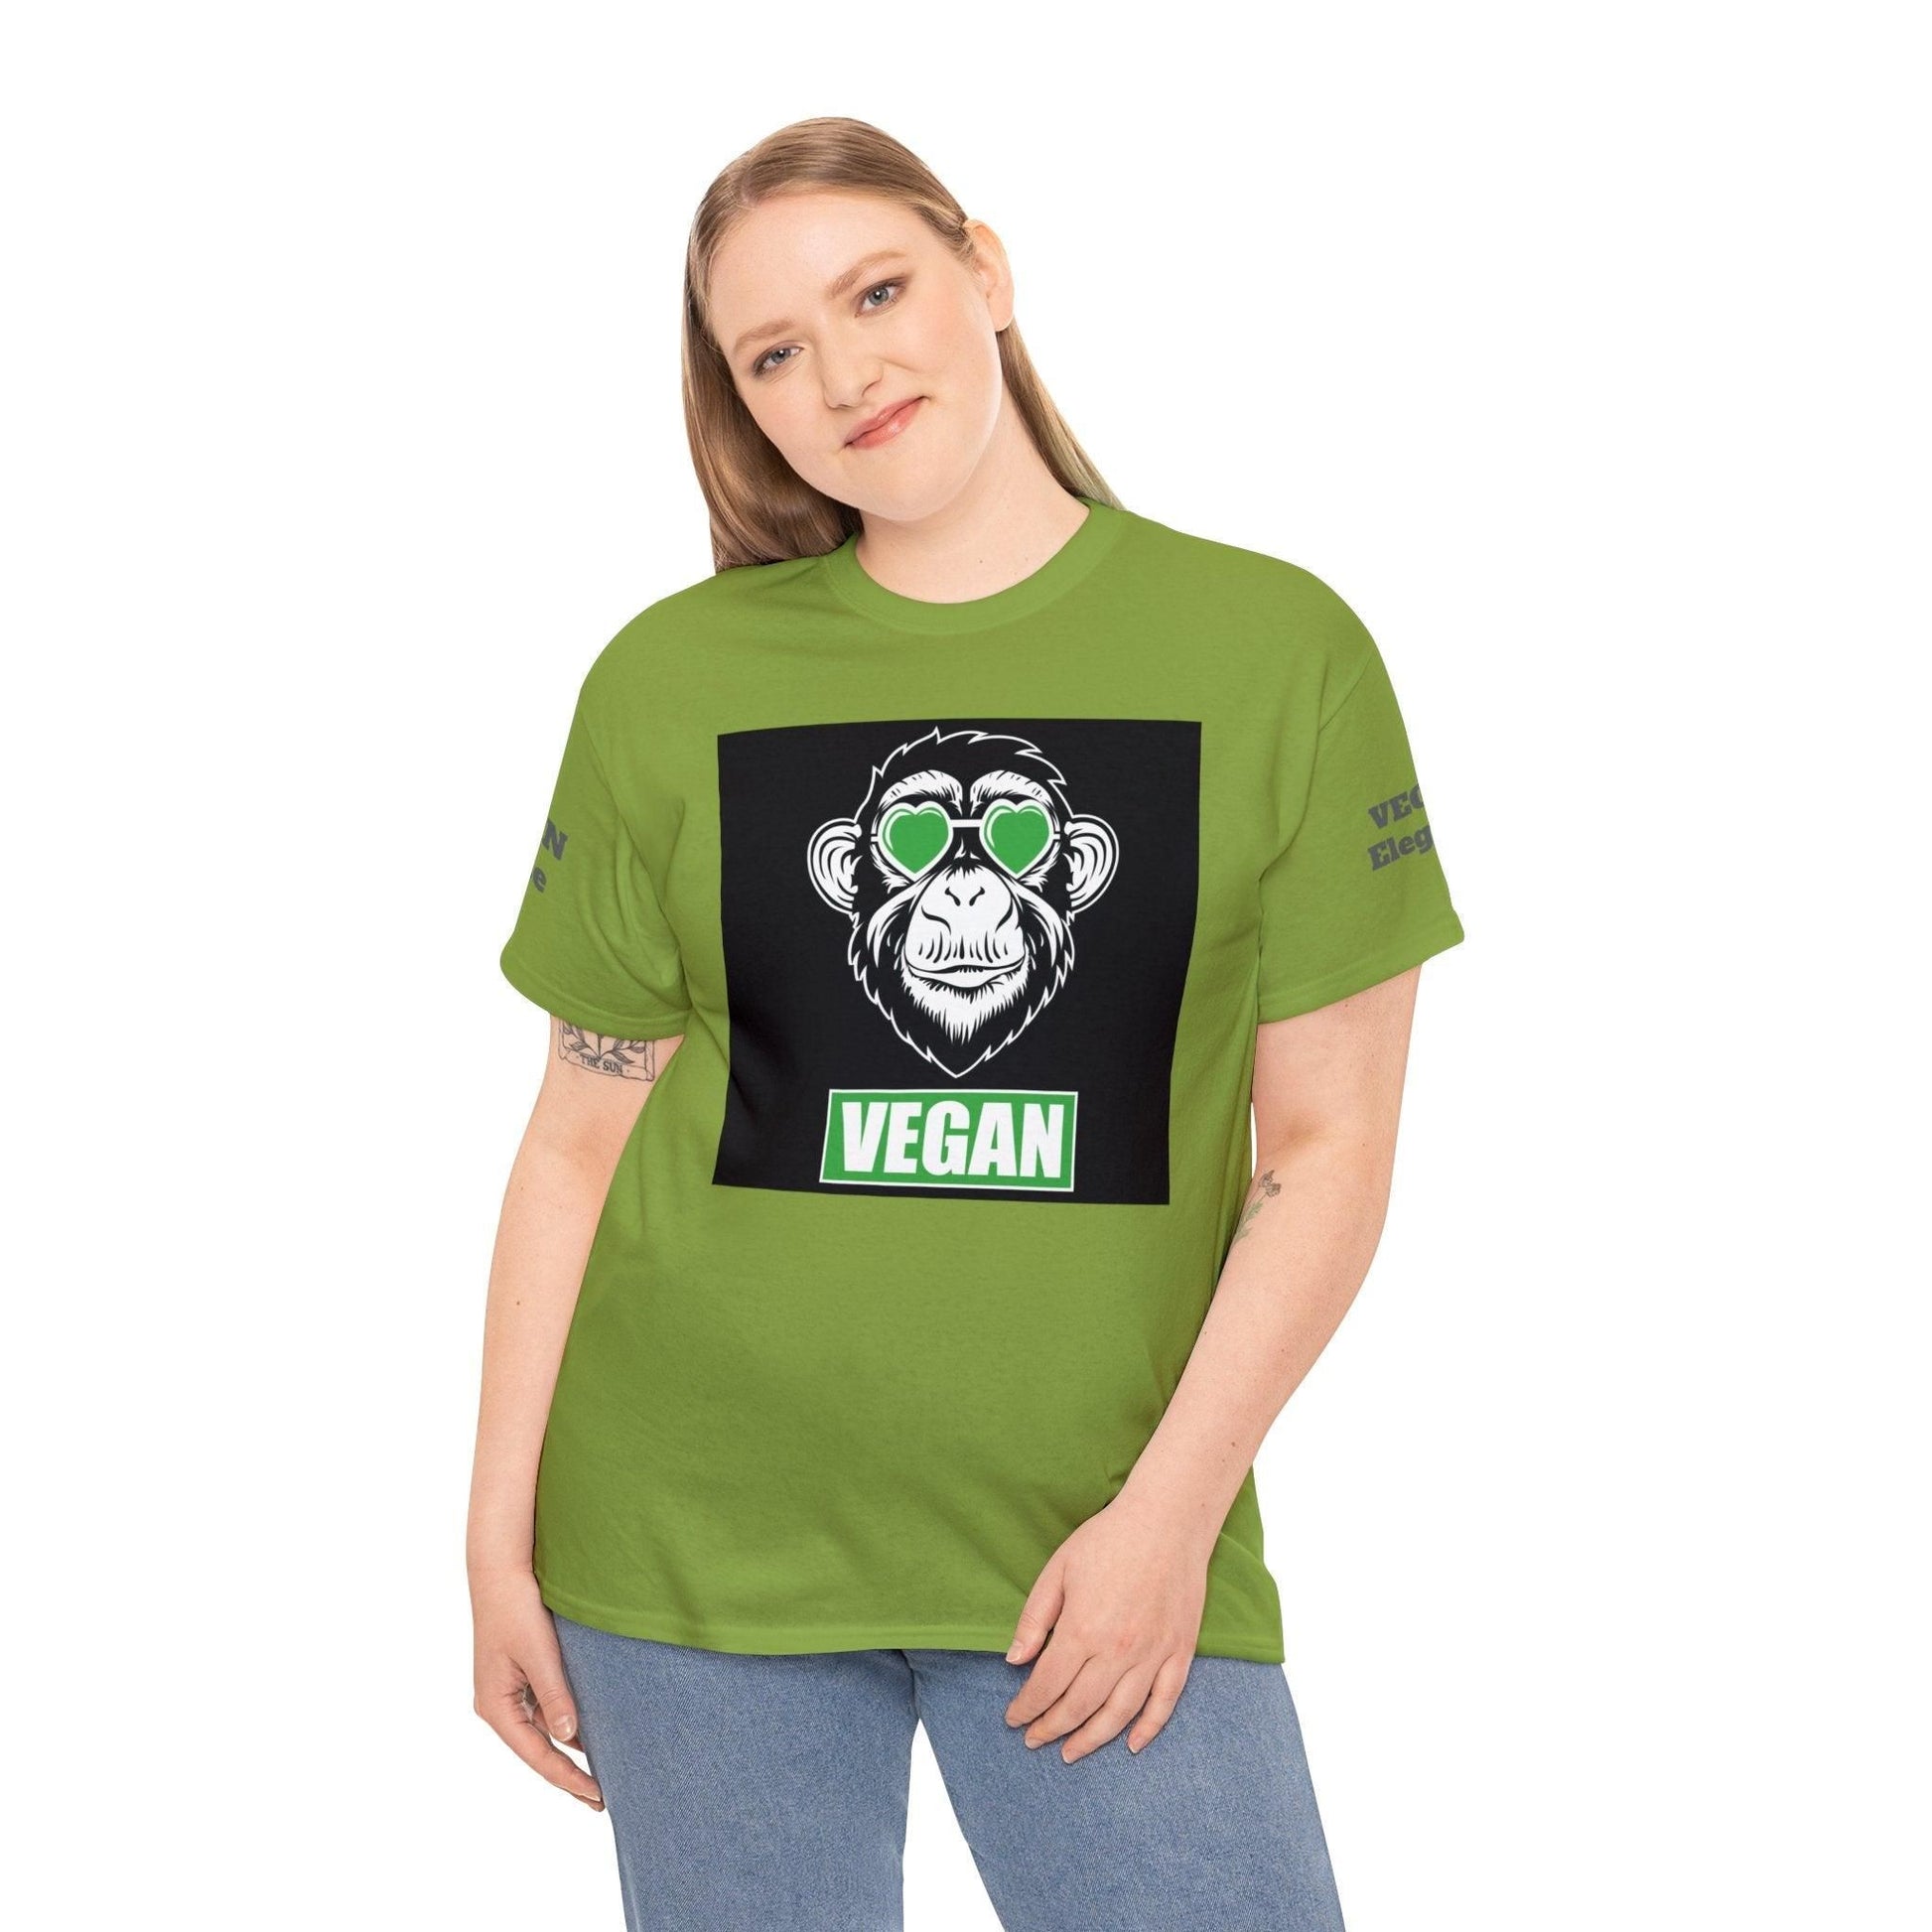 Vegan Premium Unisex Tee T-Shirt Kiwi S 